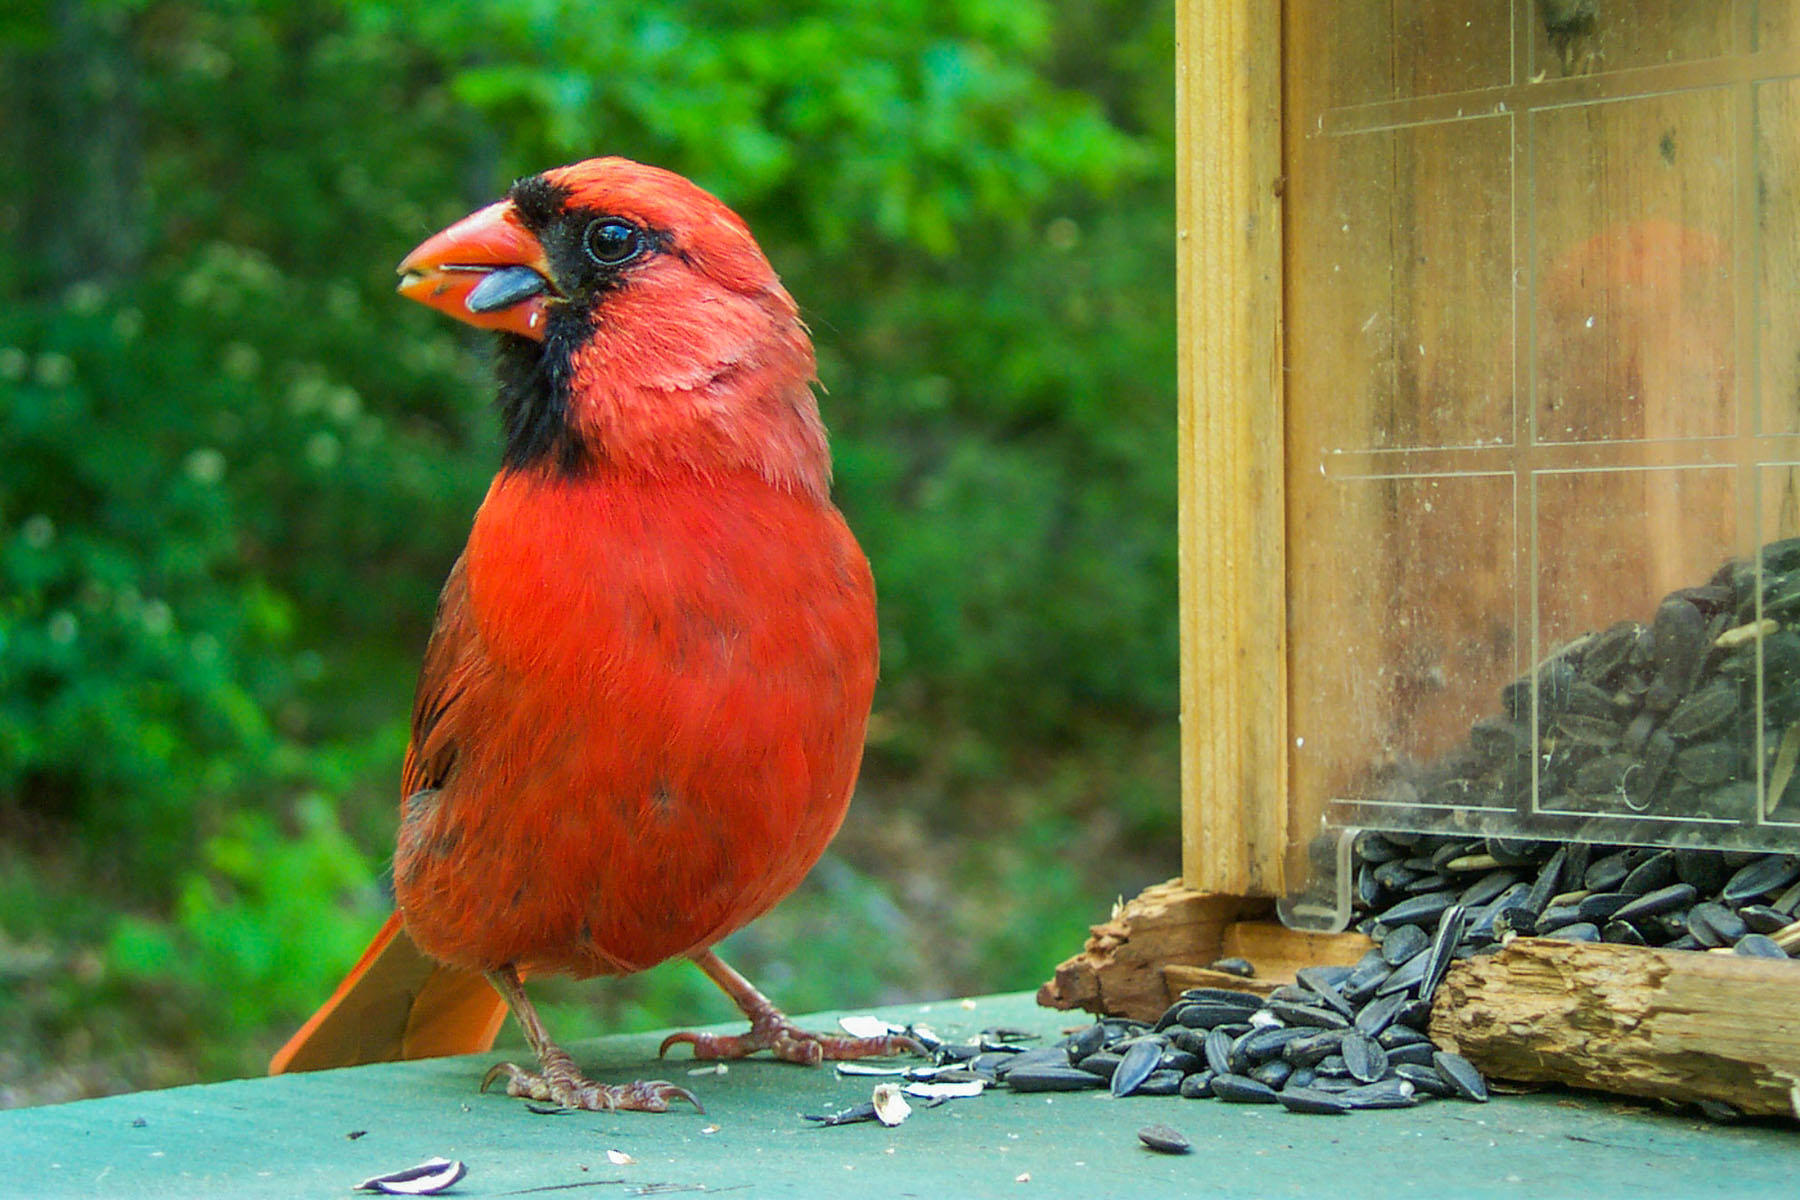 Kodak DC290, cardinal in my back yard.  Click for next photo.